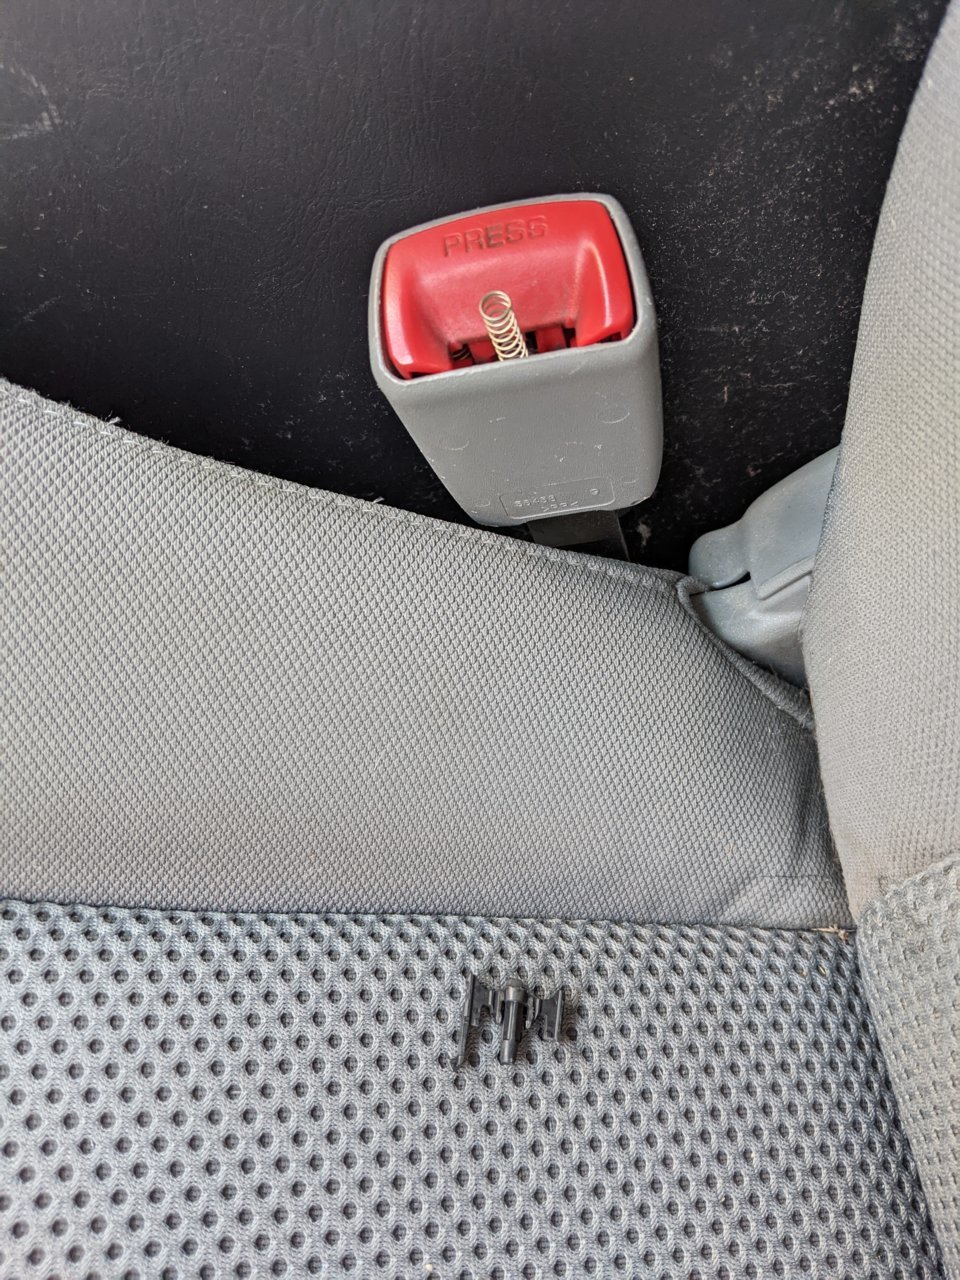 Broken seat belt - interesting failure